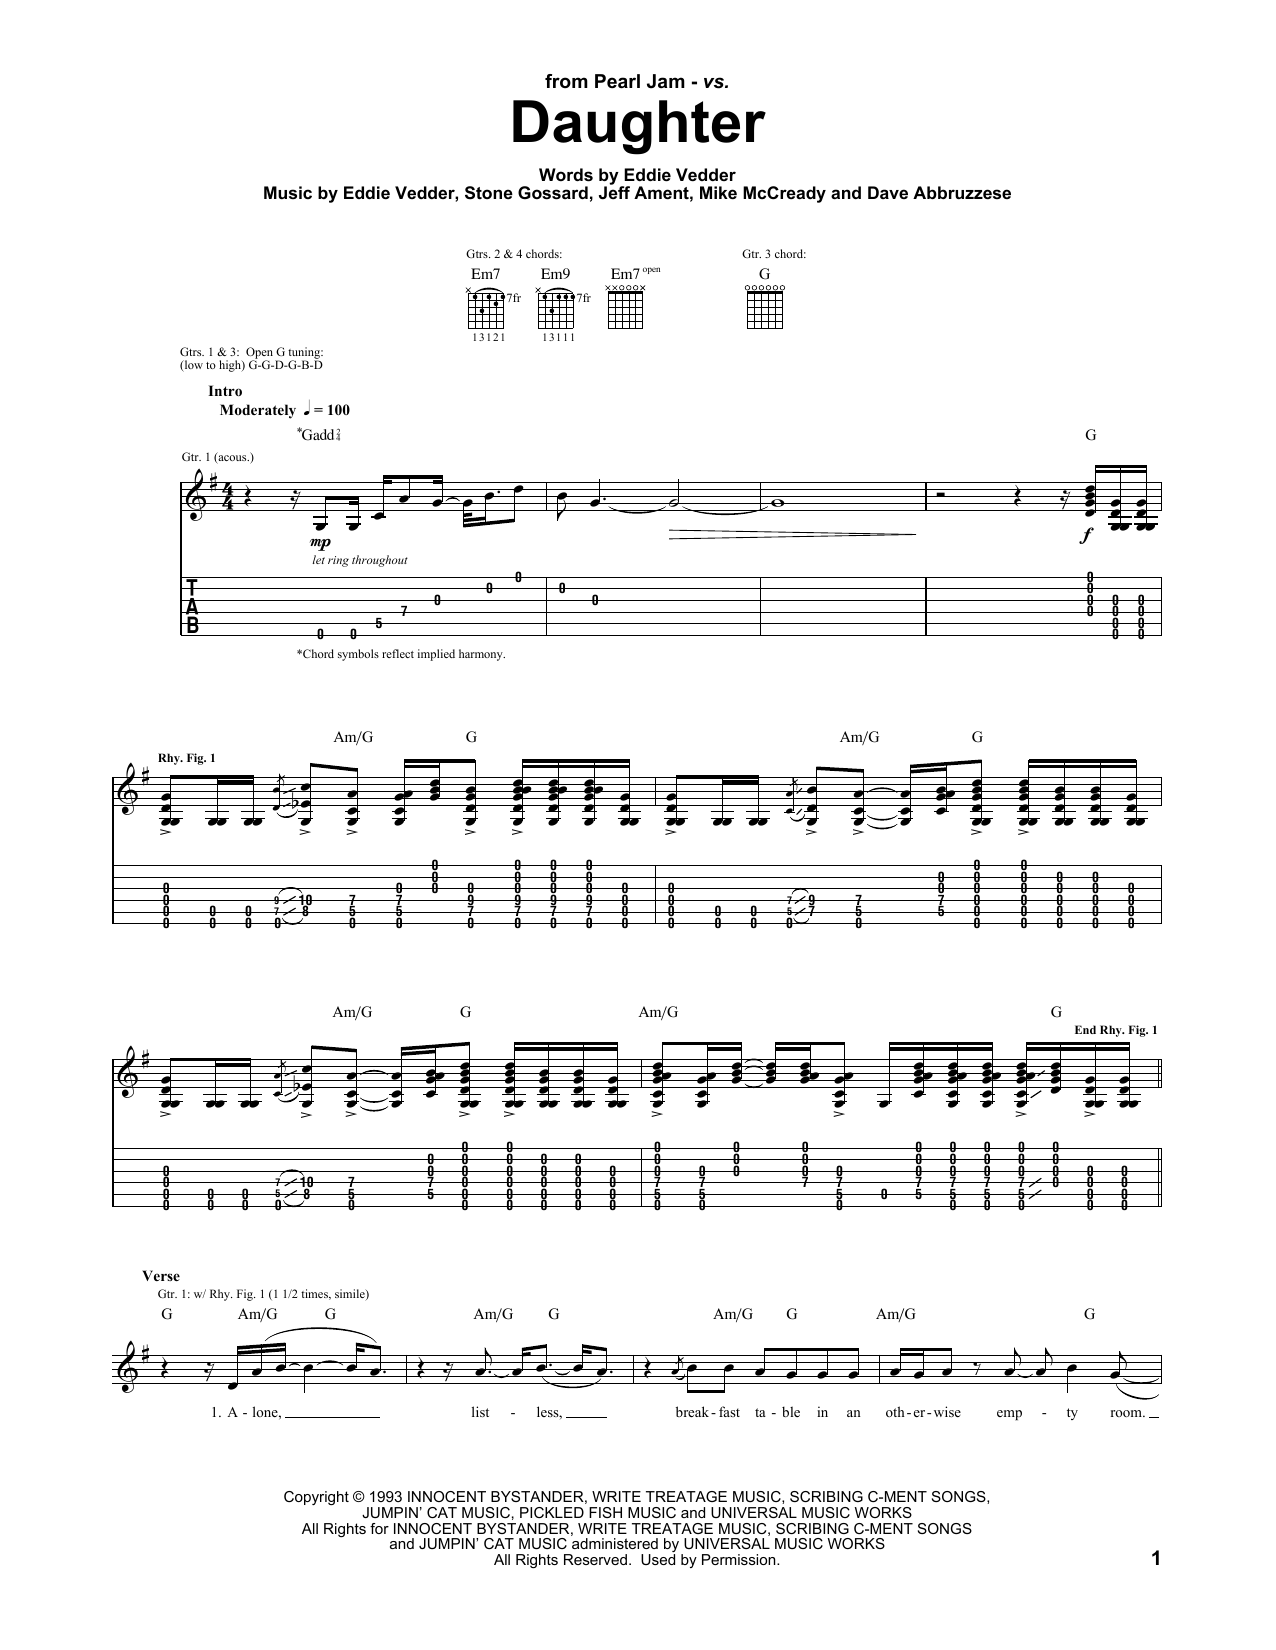 Pearl Jam Daughter Sheet Music Notes & Chords for Ukulele - Download or Print PDF